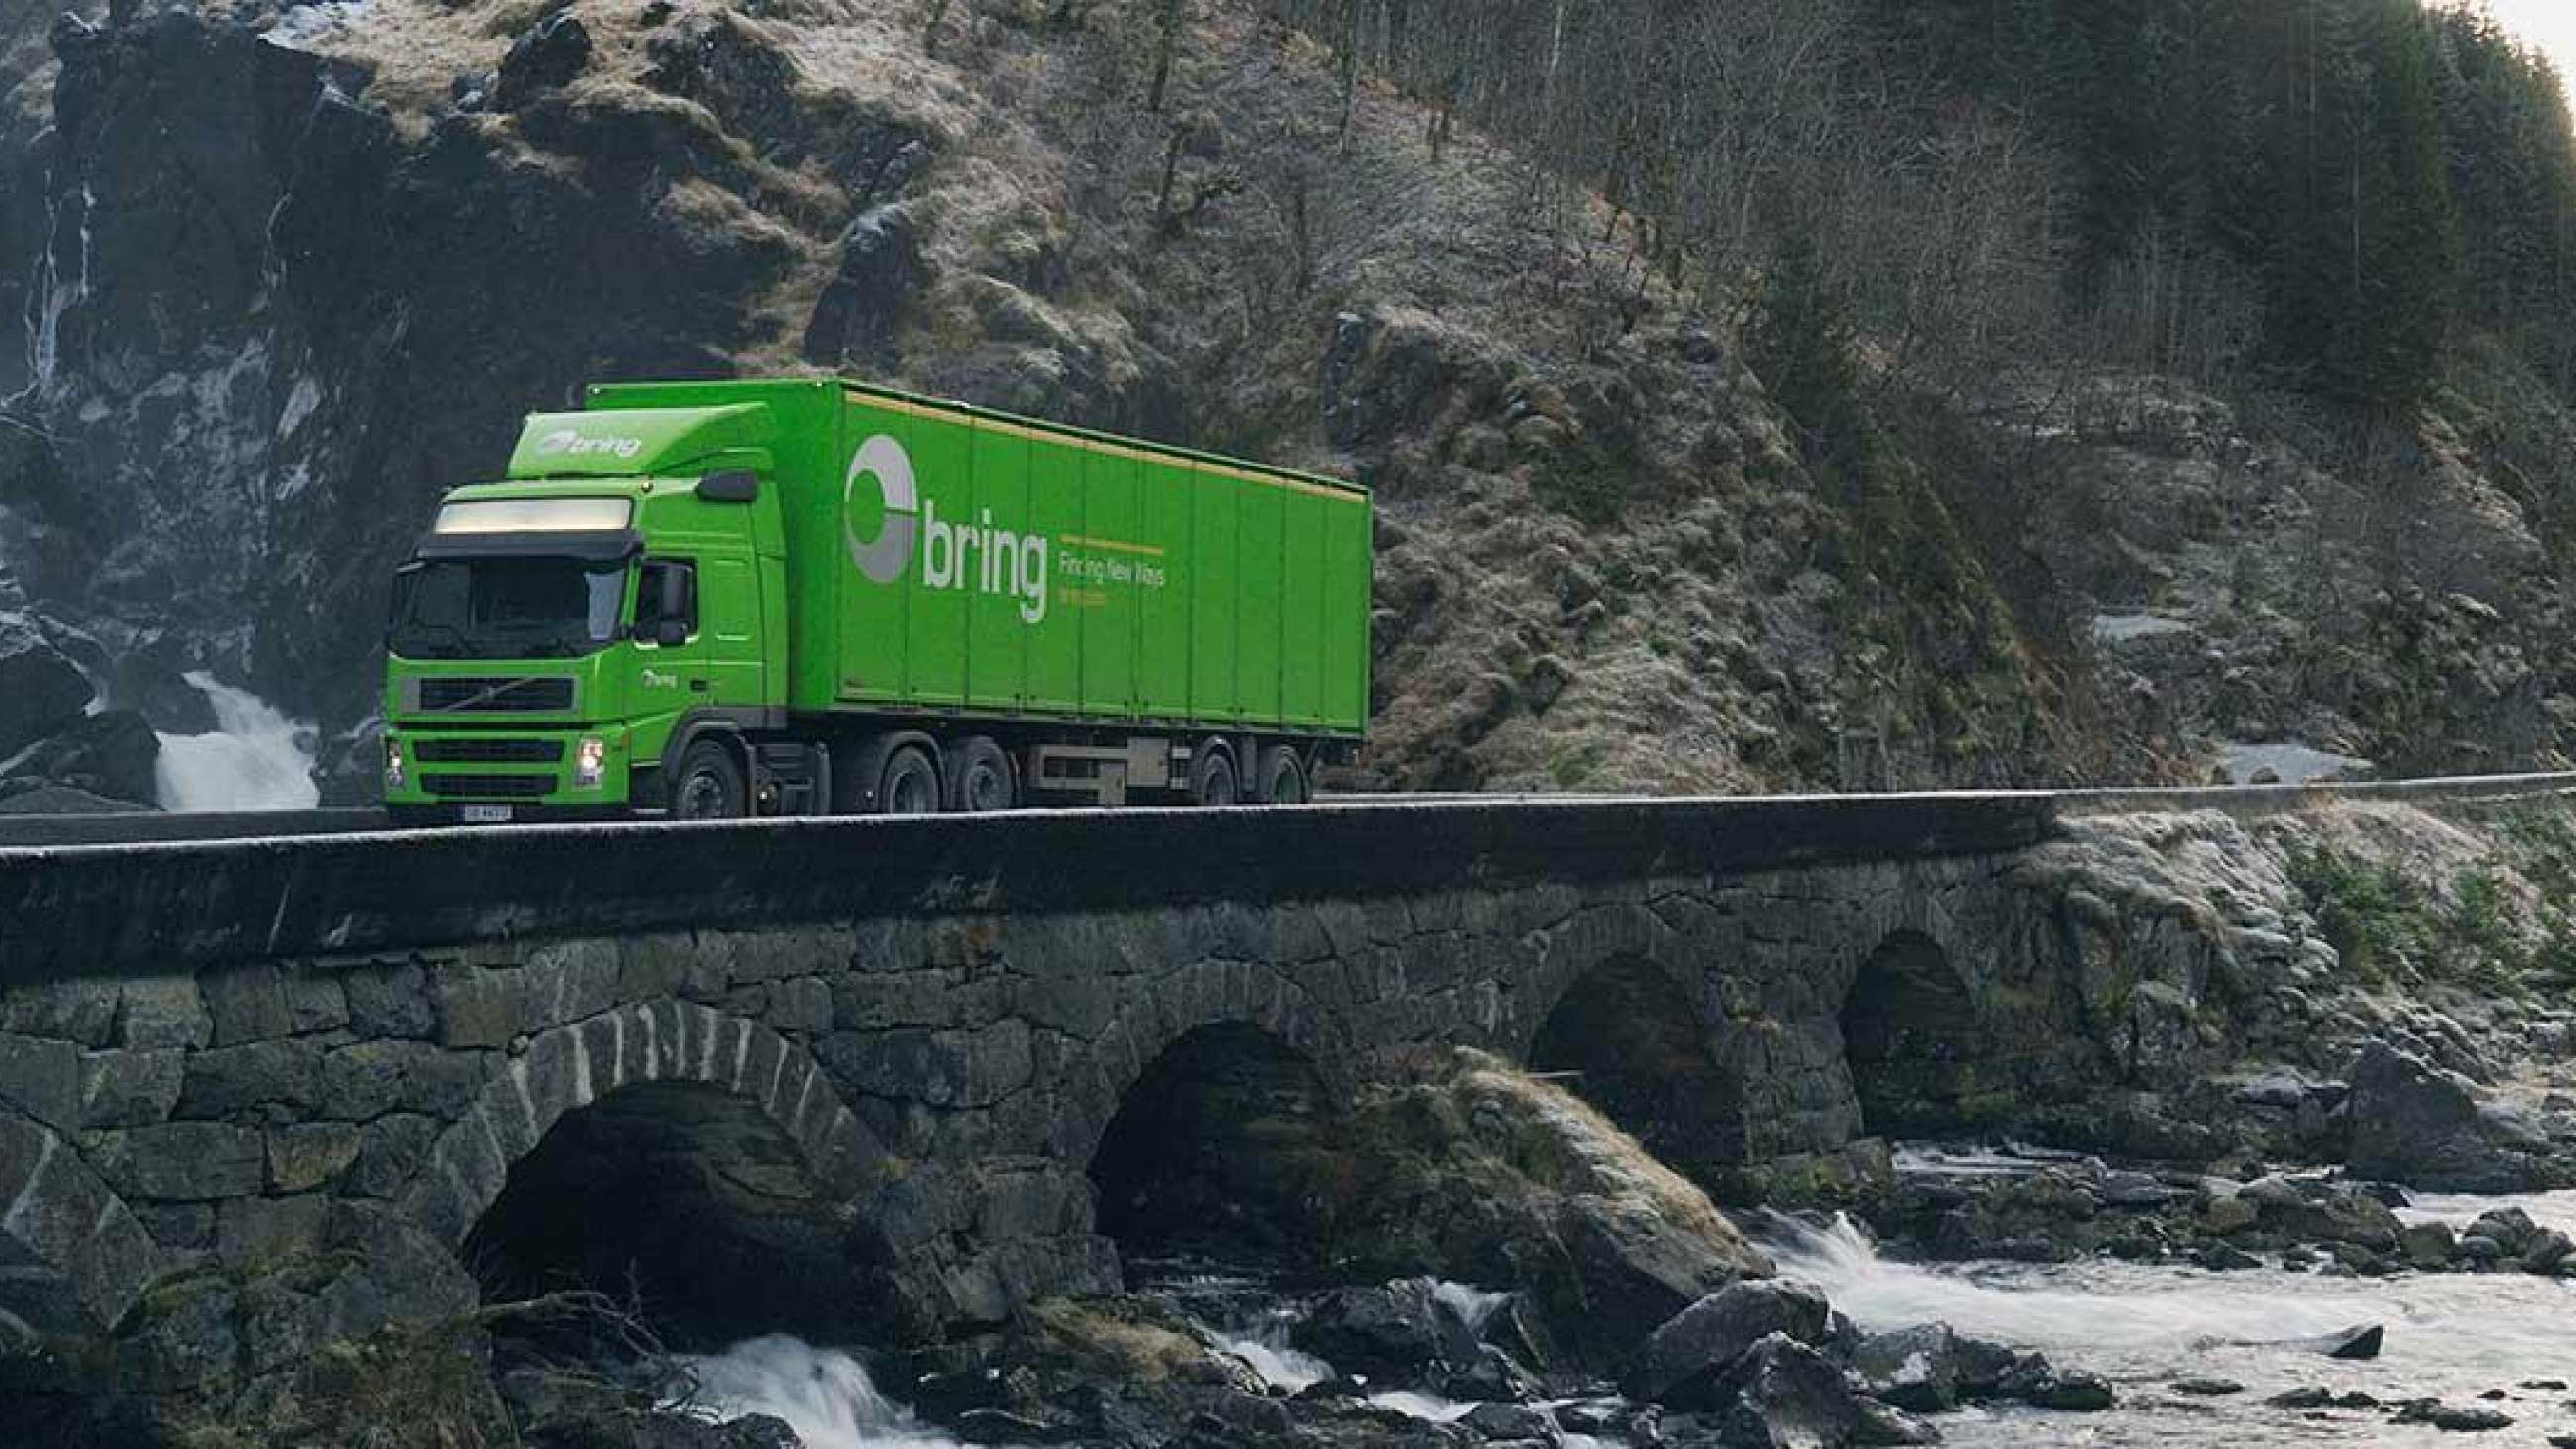 Bring truck on bridge